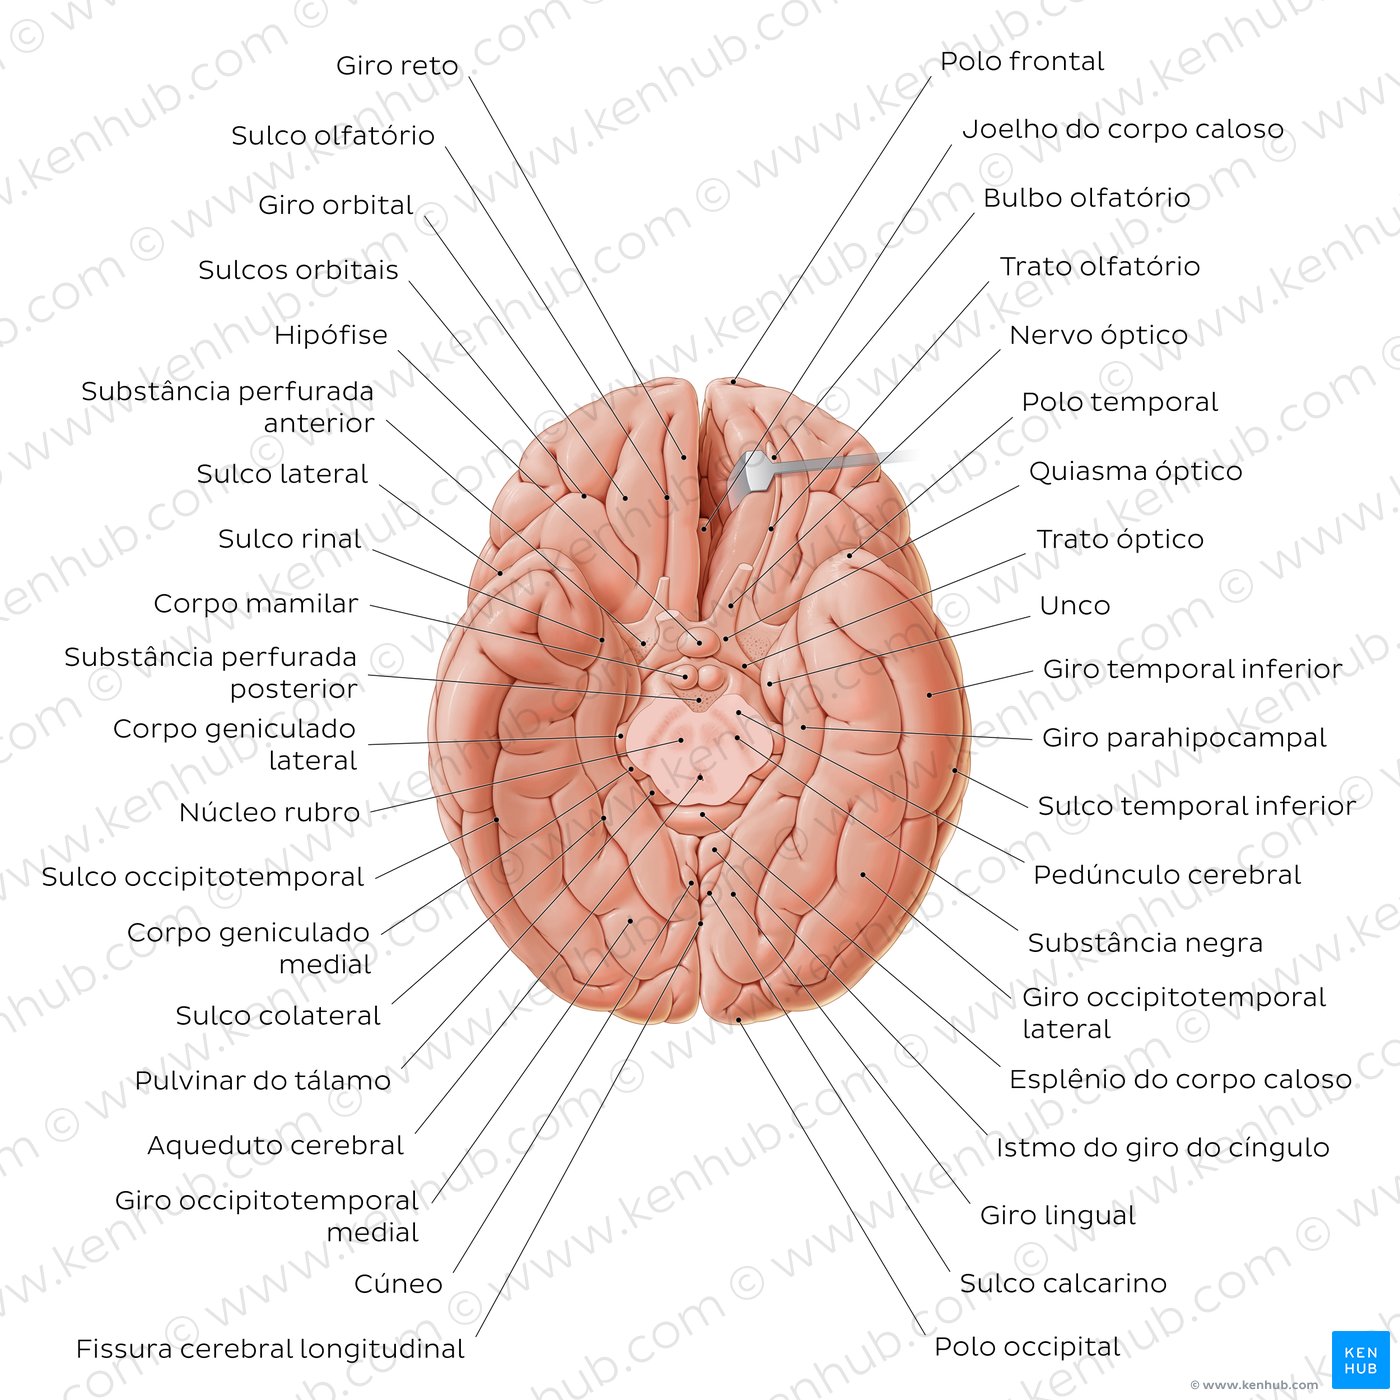 Anatomia do cérebro - vista inferior